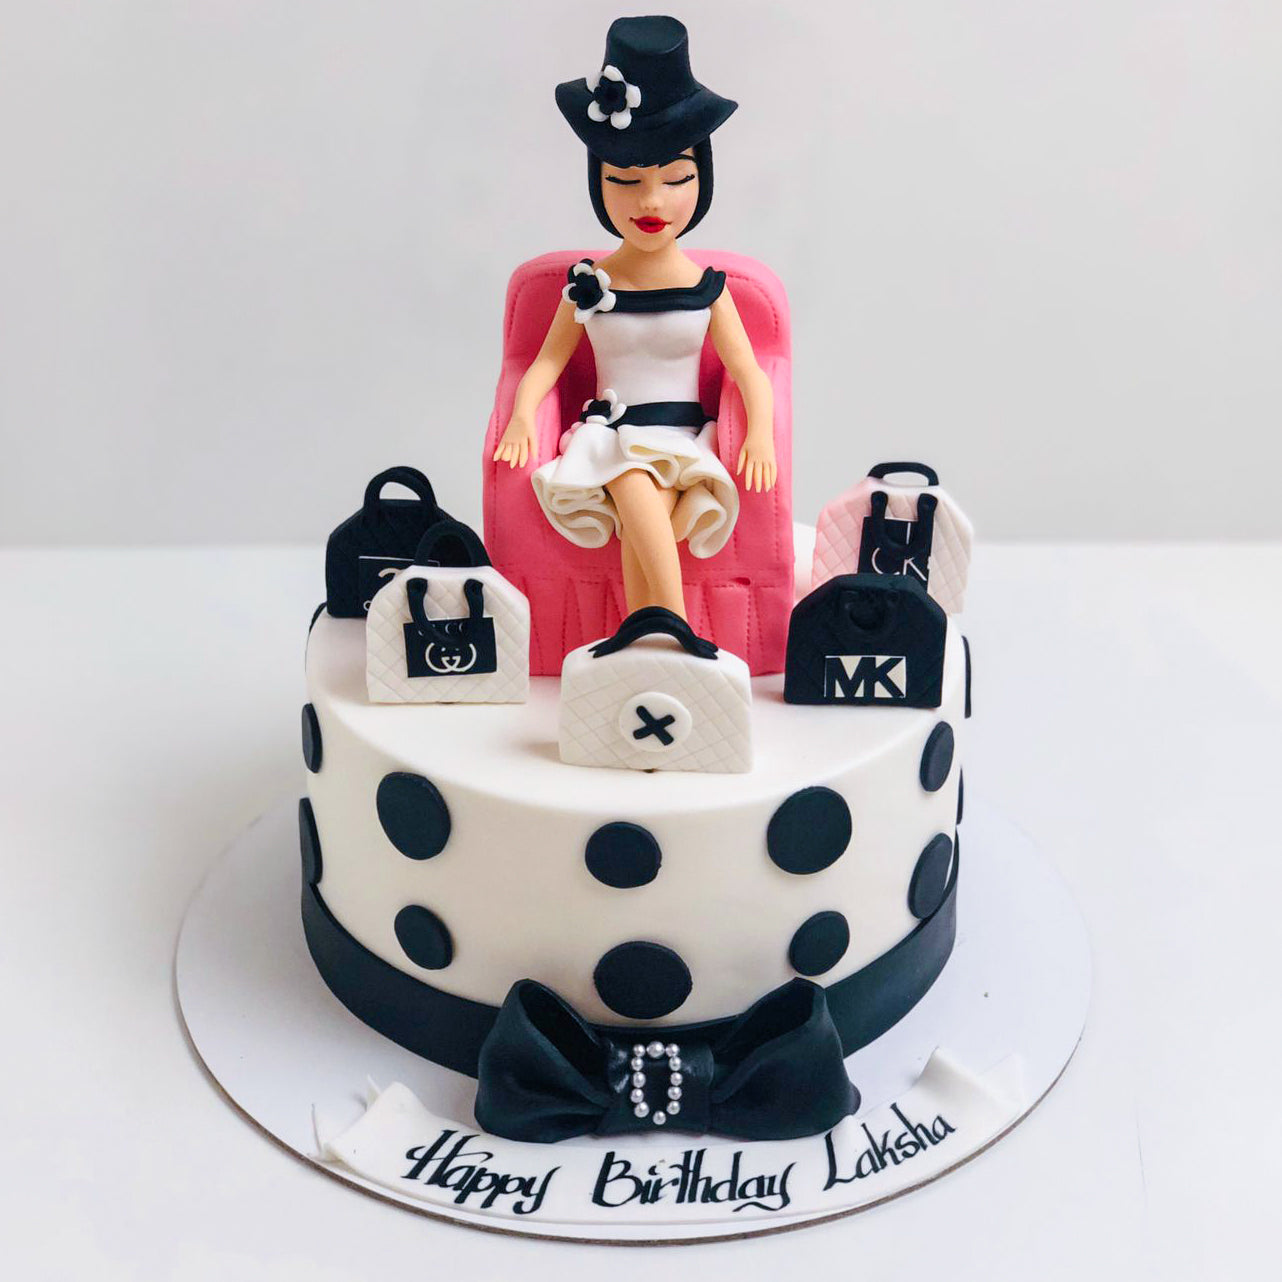 Cath Kidston Inspired Wedding Cake | Girl cakes, Cake, Birthday cake girls